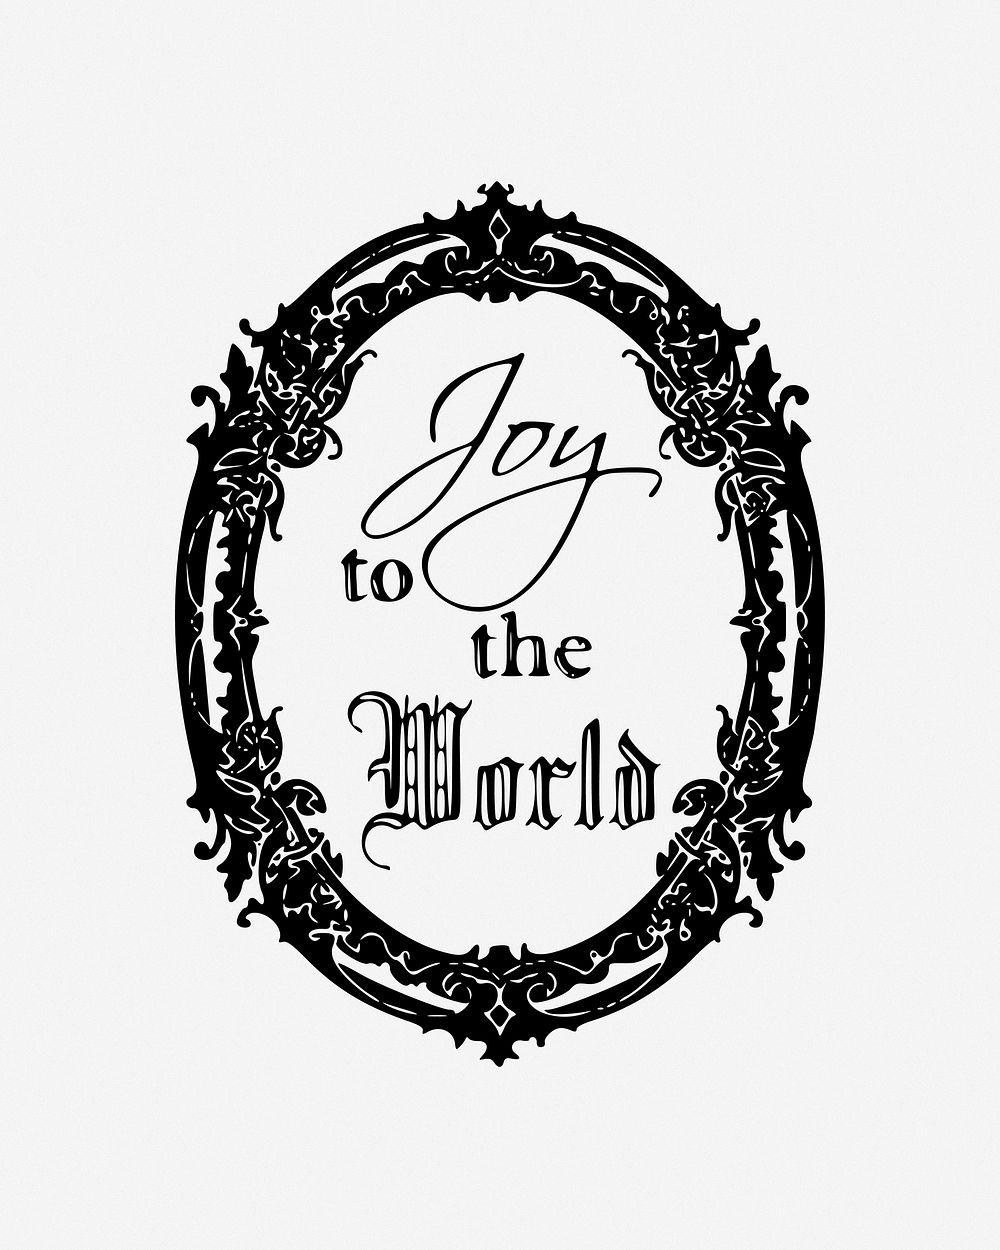 Joy to the world, message badge, clip art. Free public domain CC0 image.